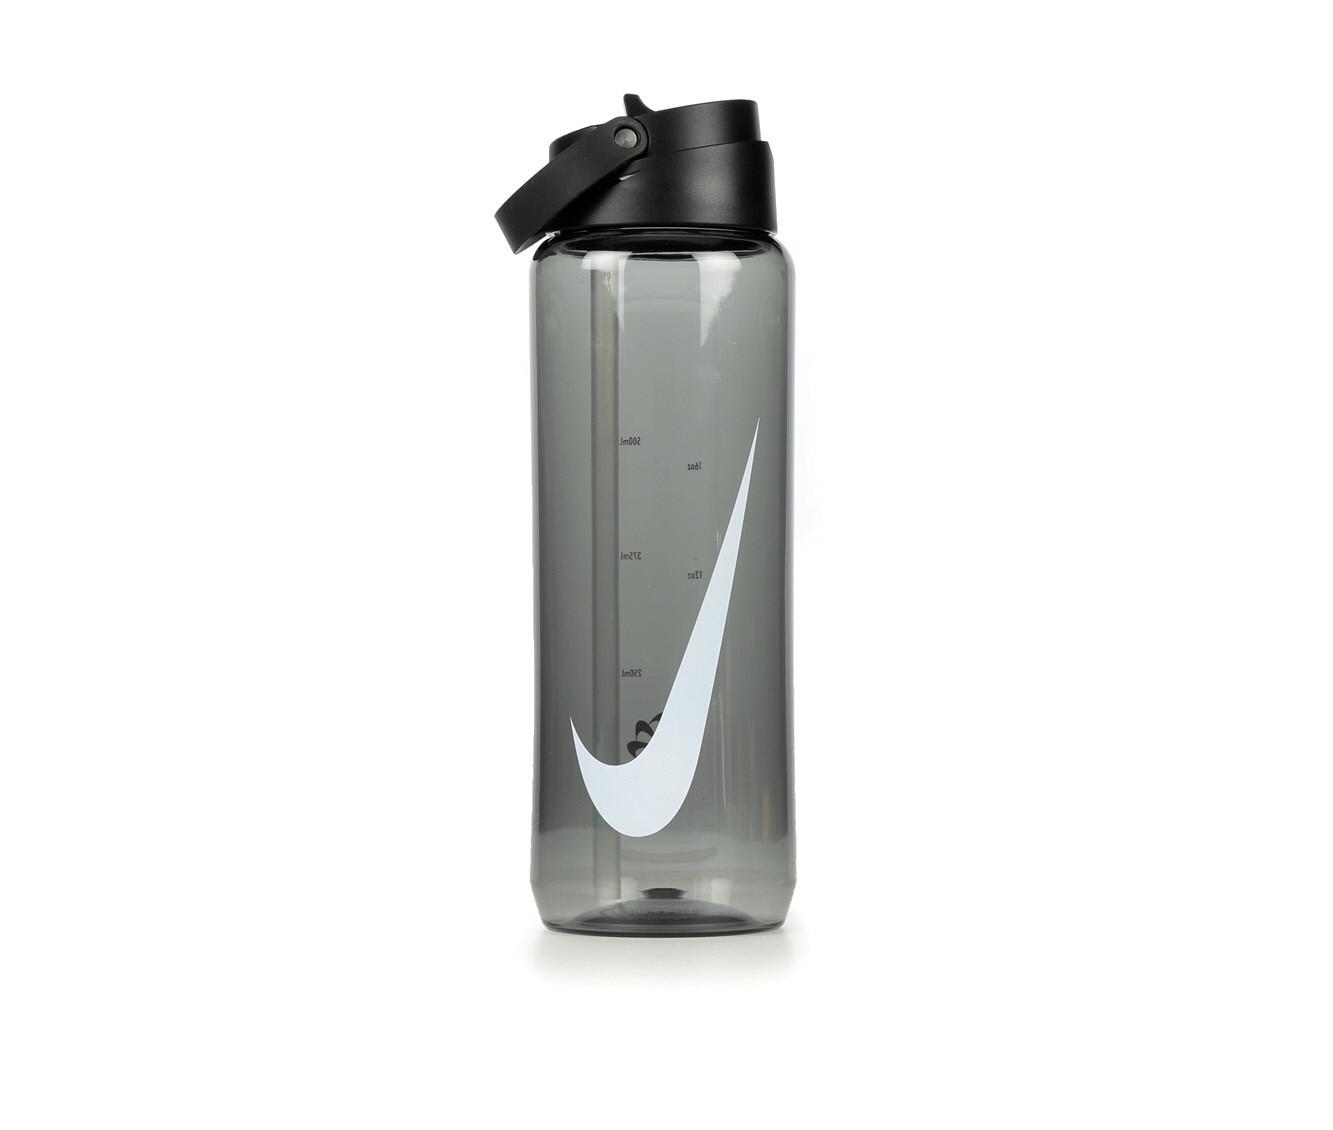 Nike Recharge 24 oz. Stainless Steel Straw Bottle, Black/Black/White